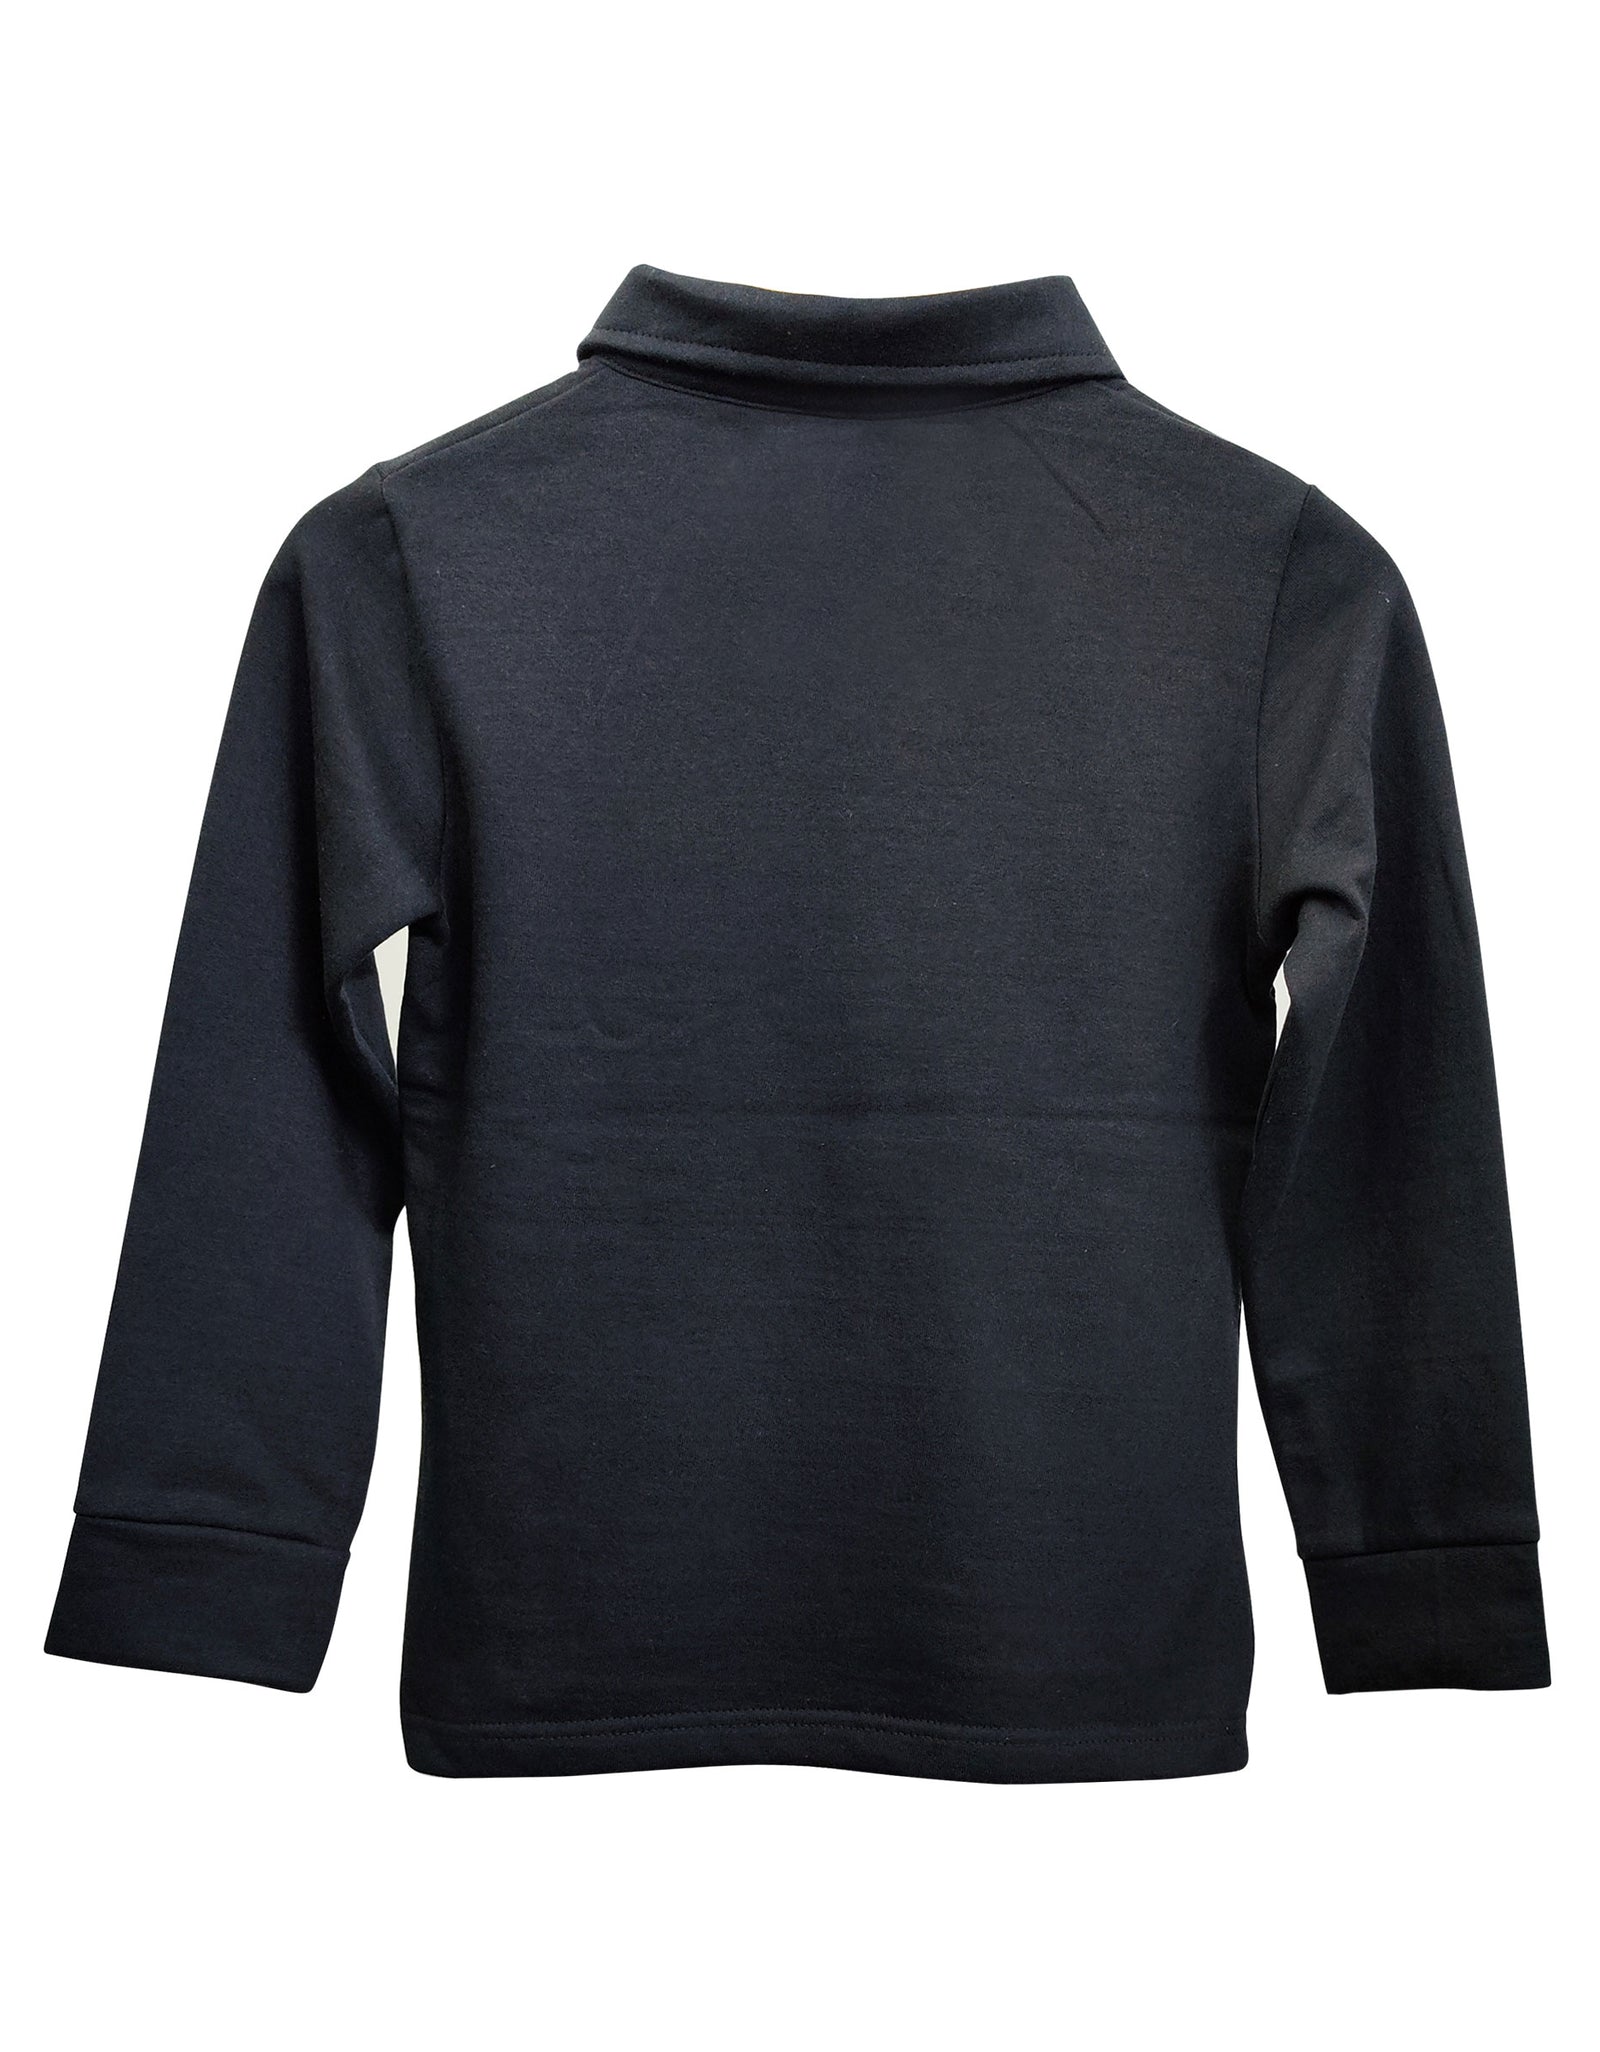 Sweatshirt for Junior  - Black